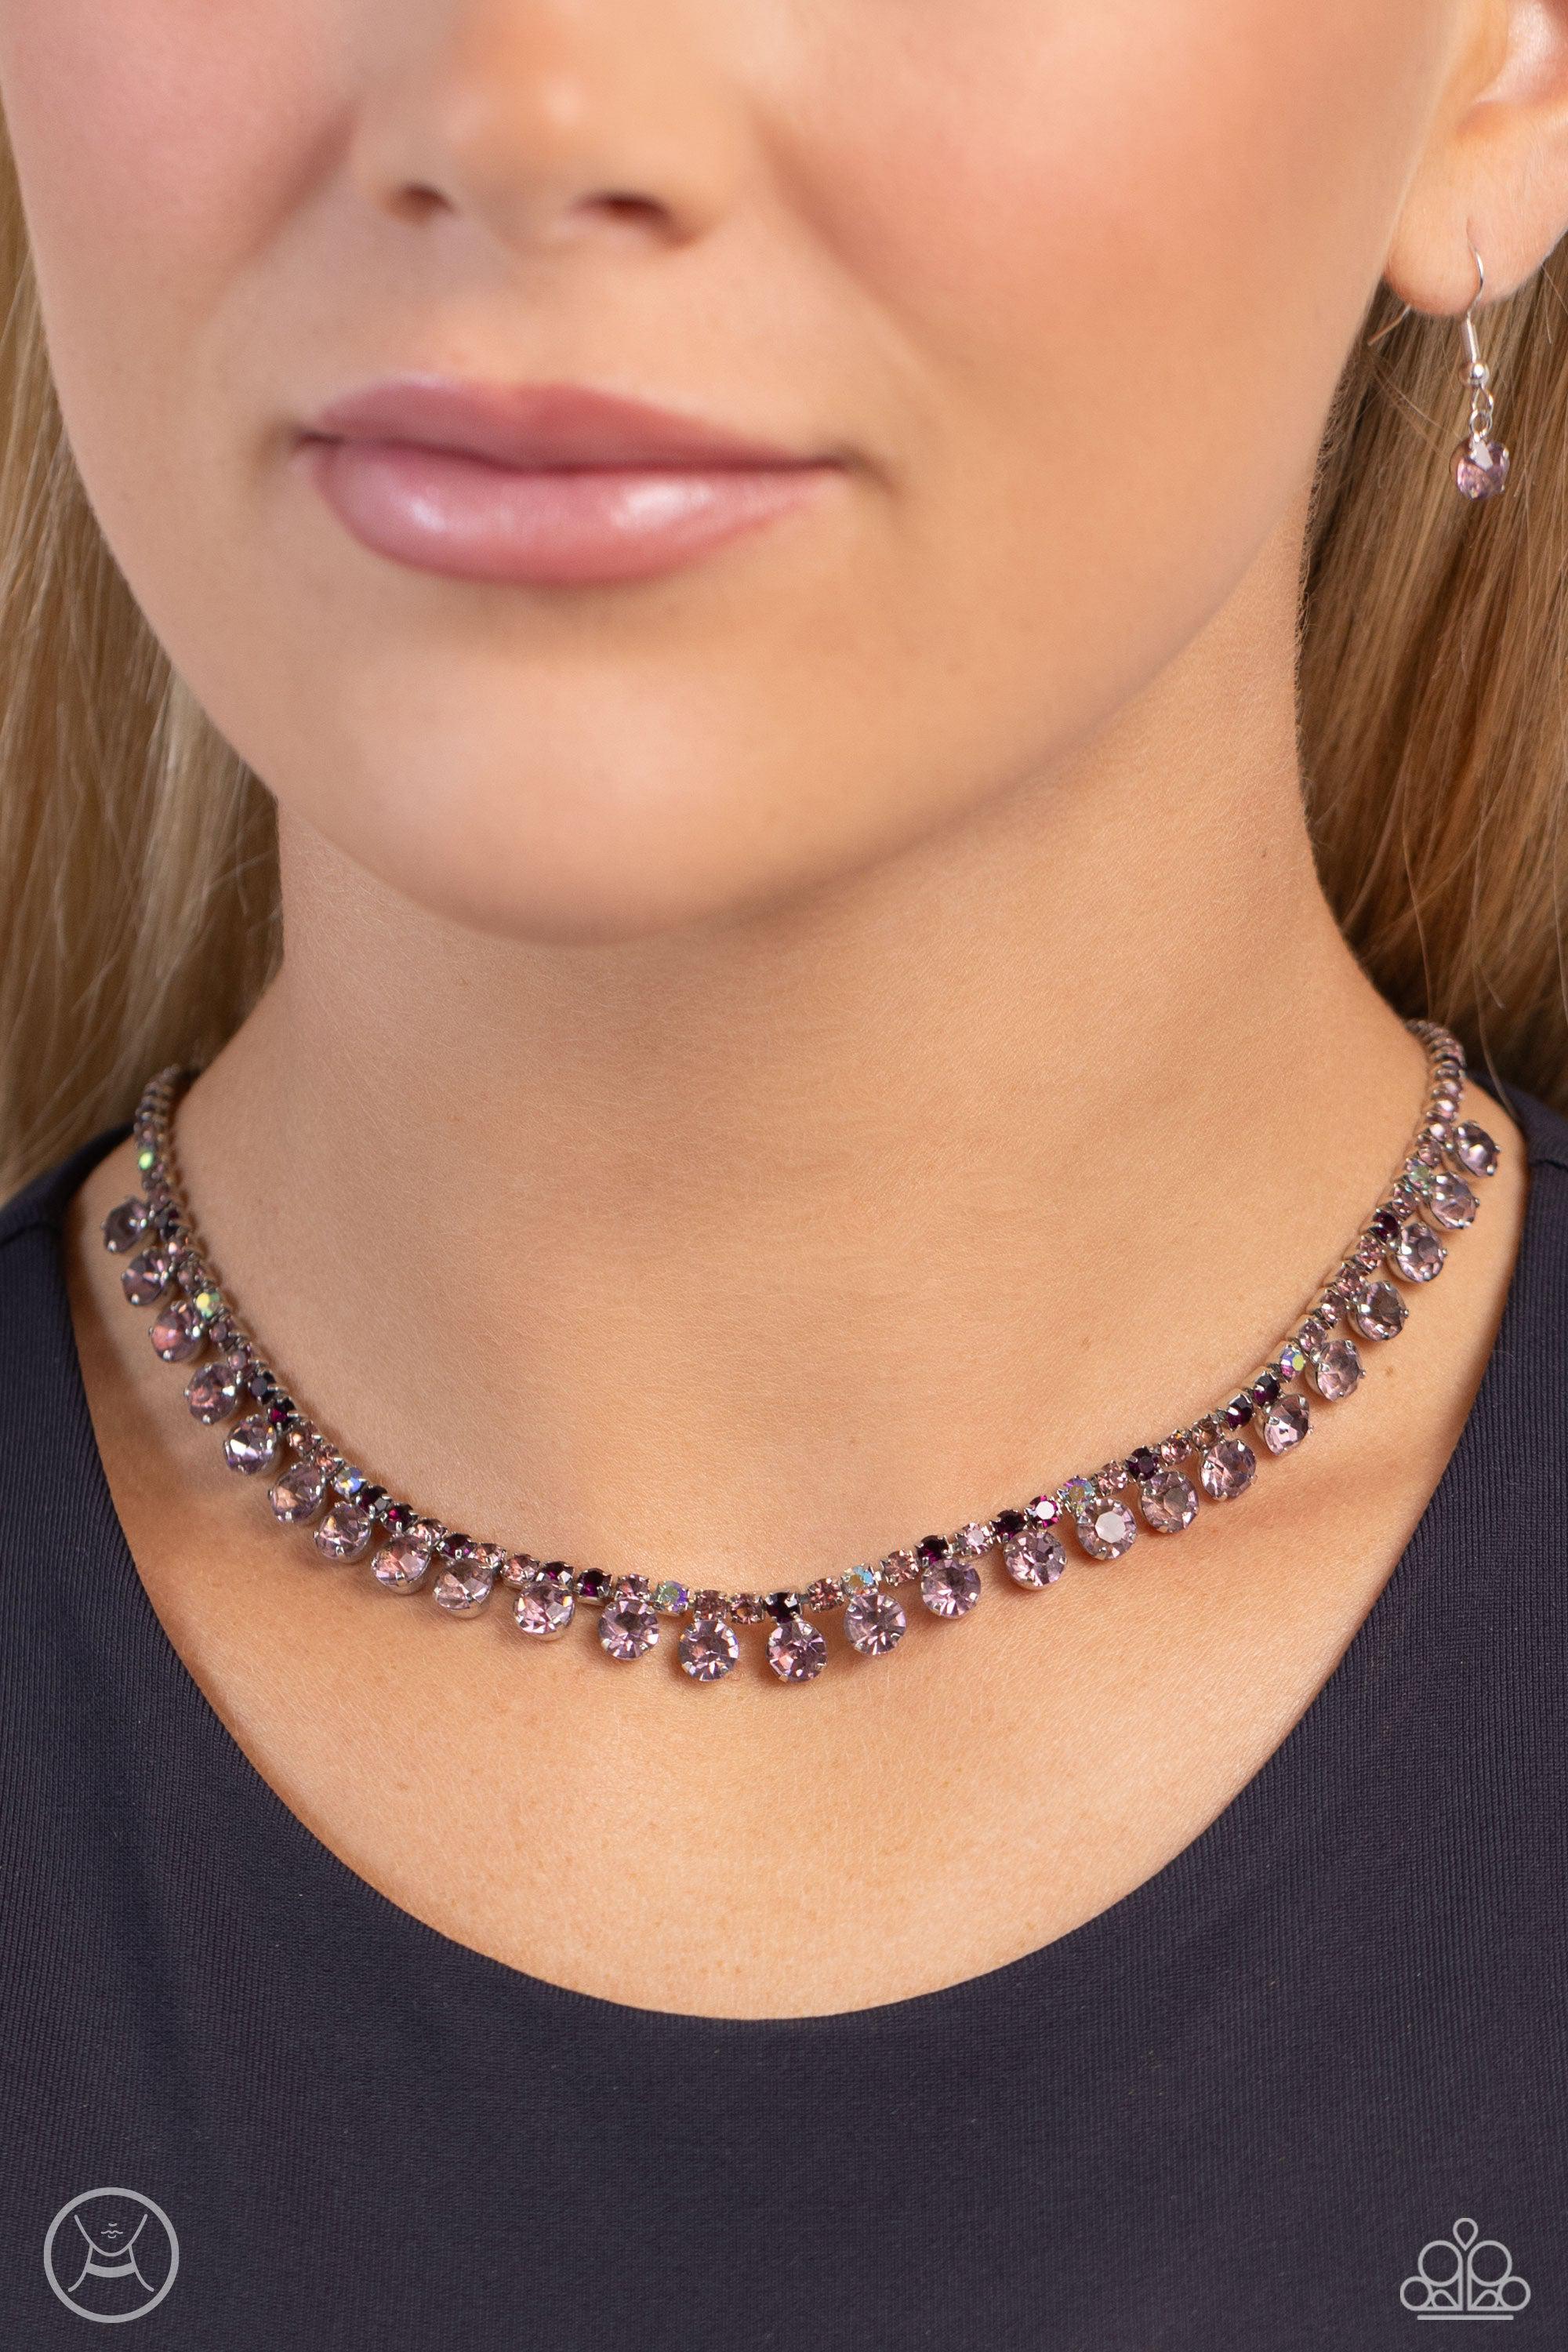 Ritzy Rhinestones Purple Choker Necklace - Paparazzi Accessories- lightbox - CarasShop.com - $5 Jewelry by Cara Jewels